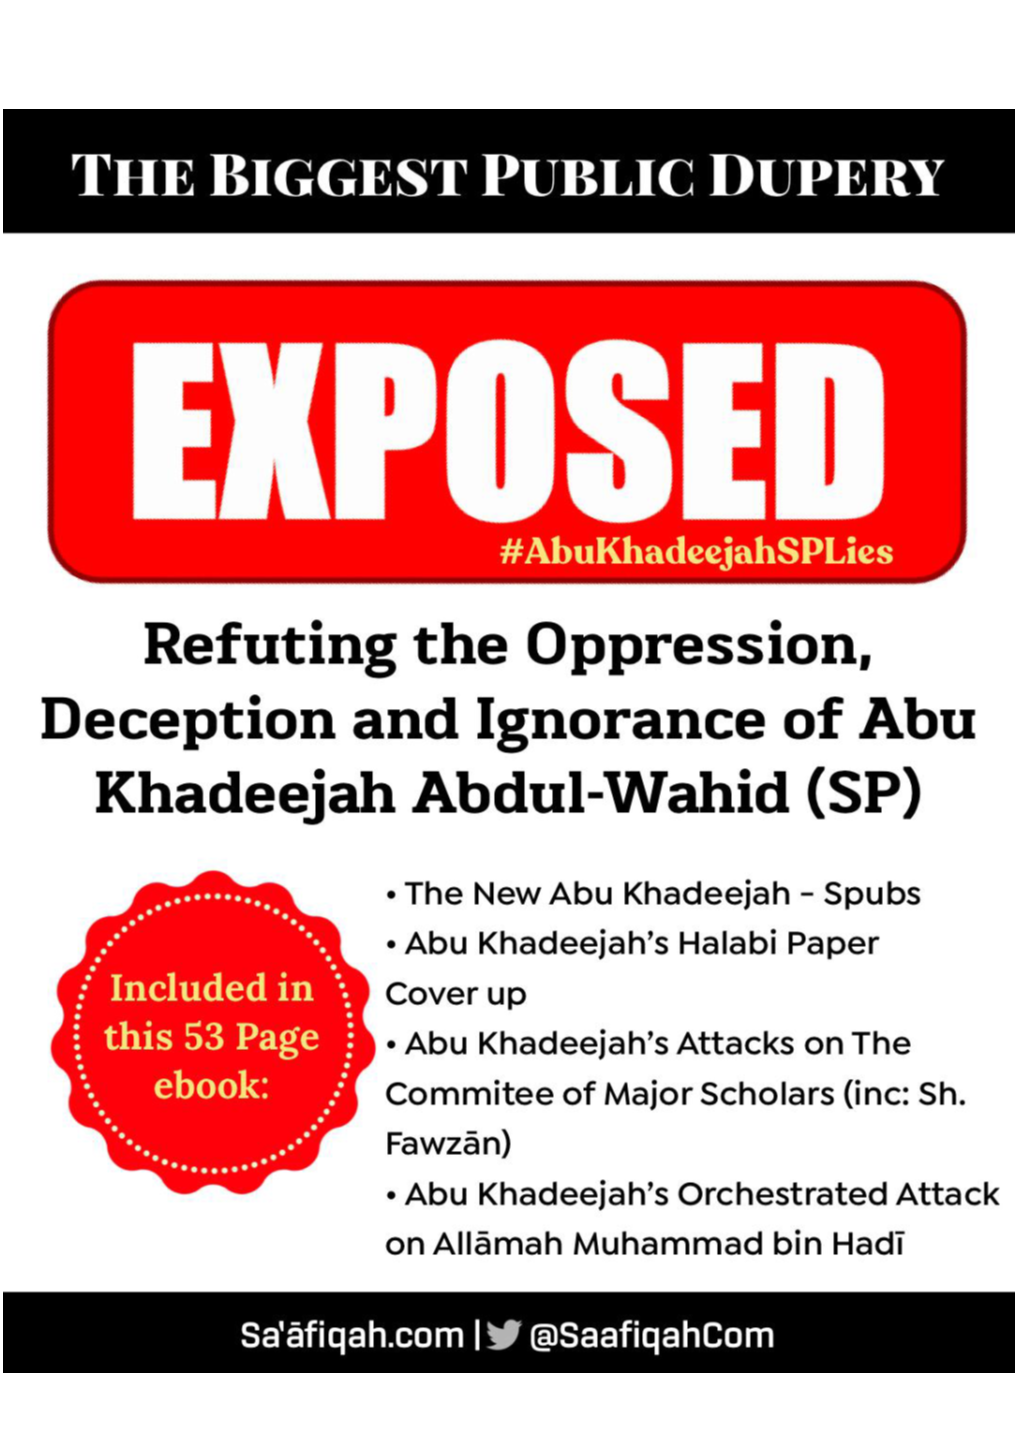 Refuting the Oppression, Deception and Ignorance of Abu Khadeejah